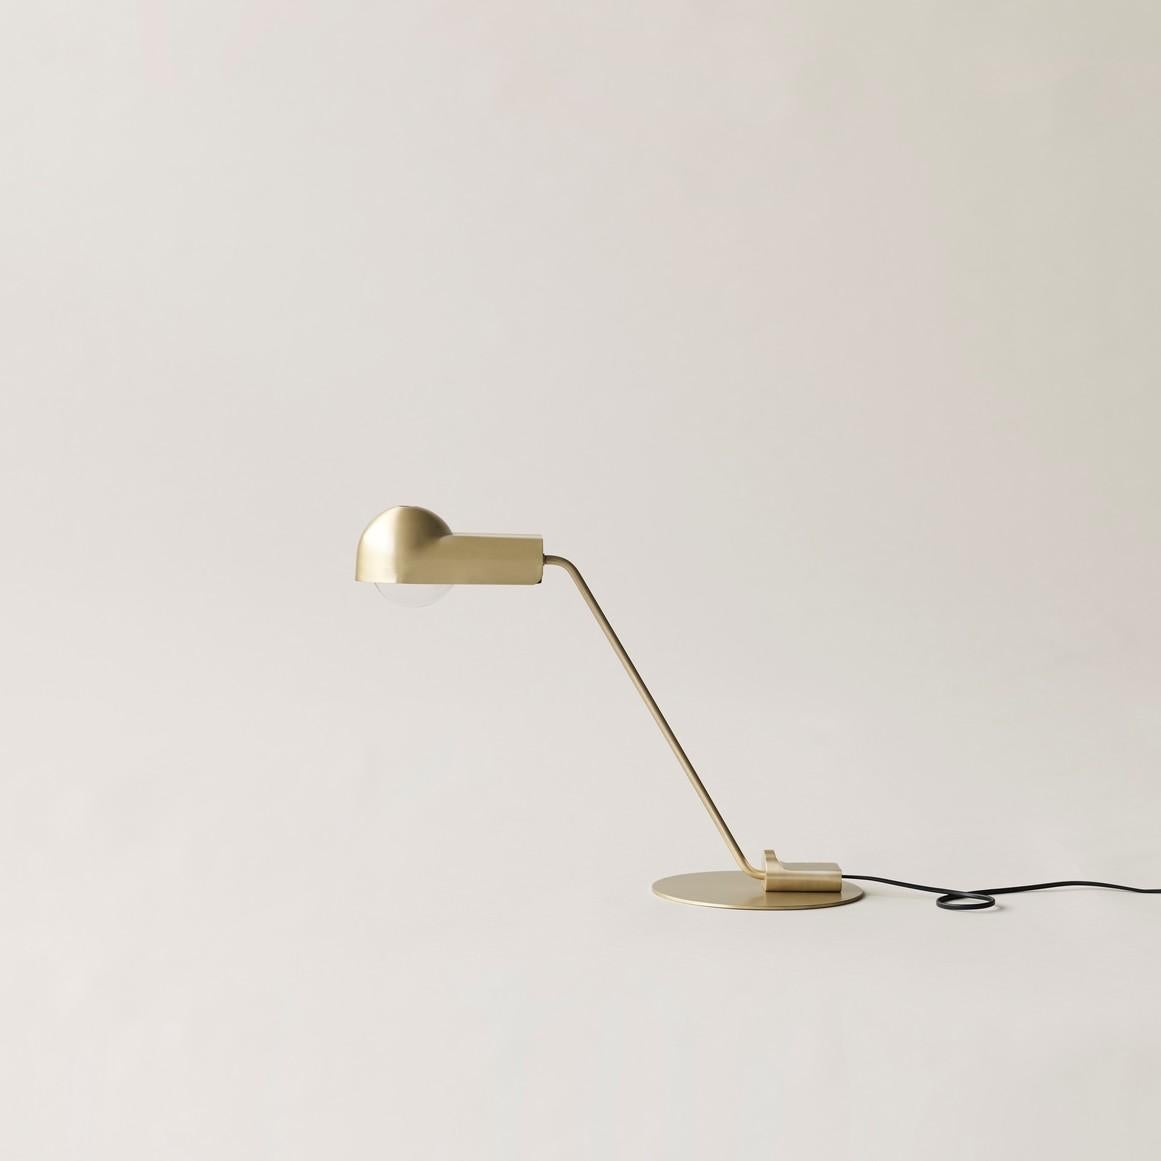 Set of Two Joe Colombo 'Domo' Brass Table Lamps by Karakter 1